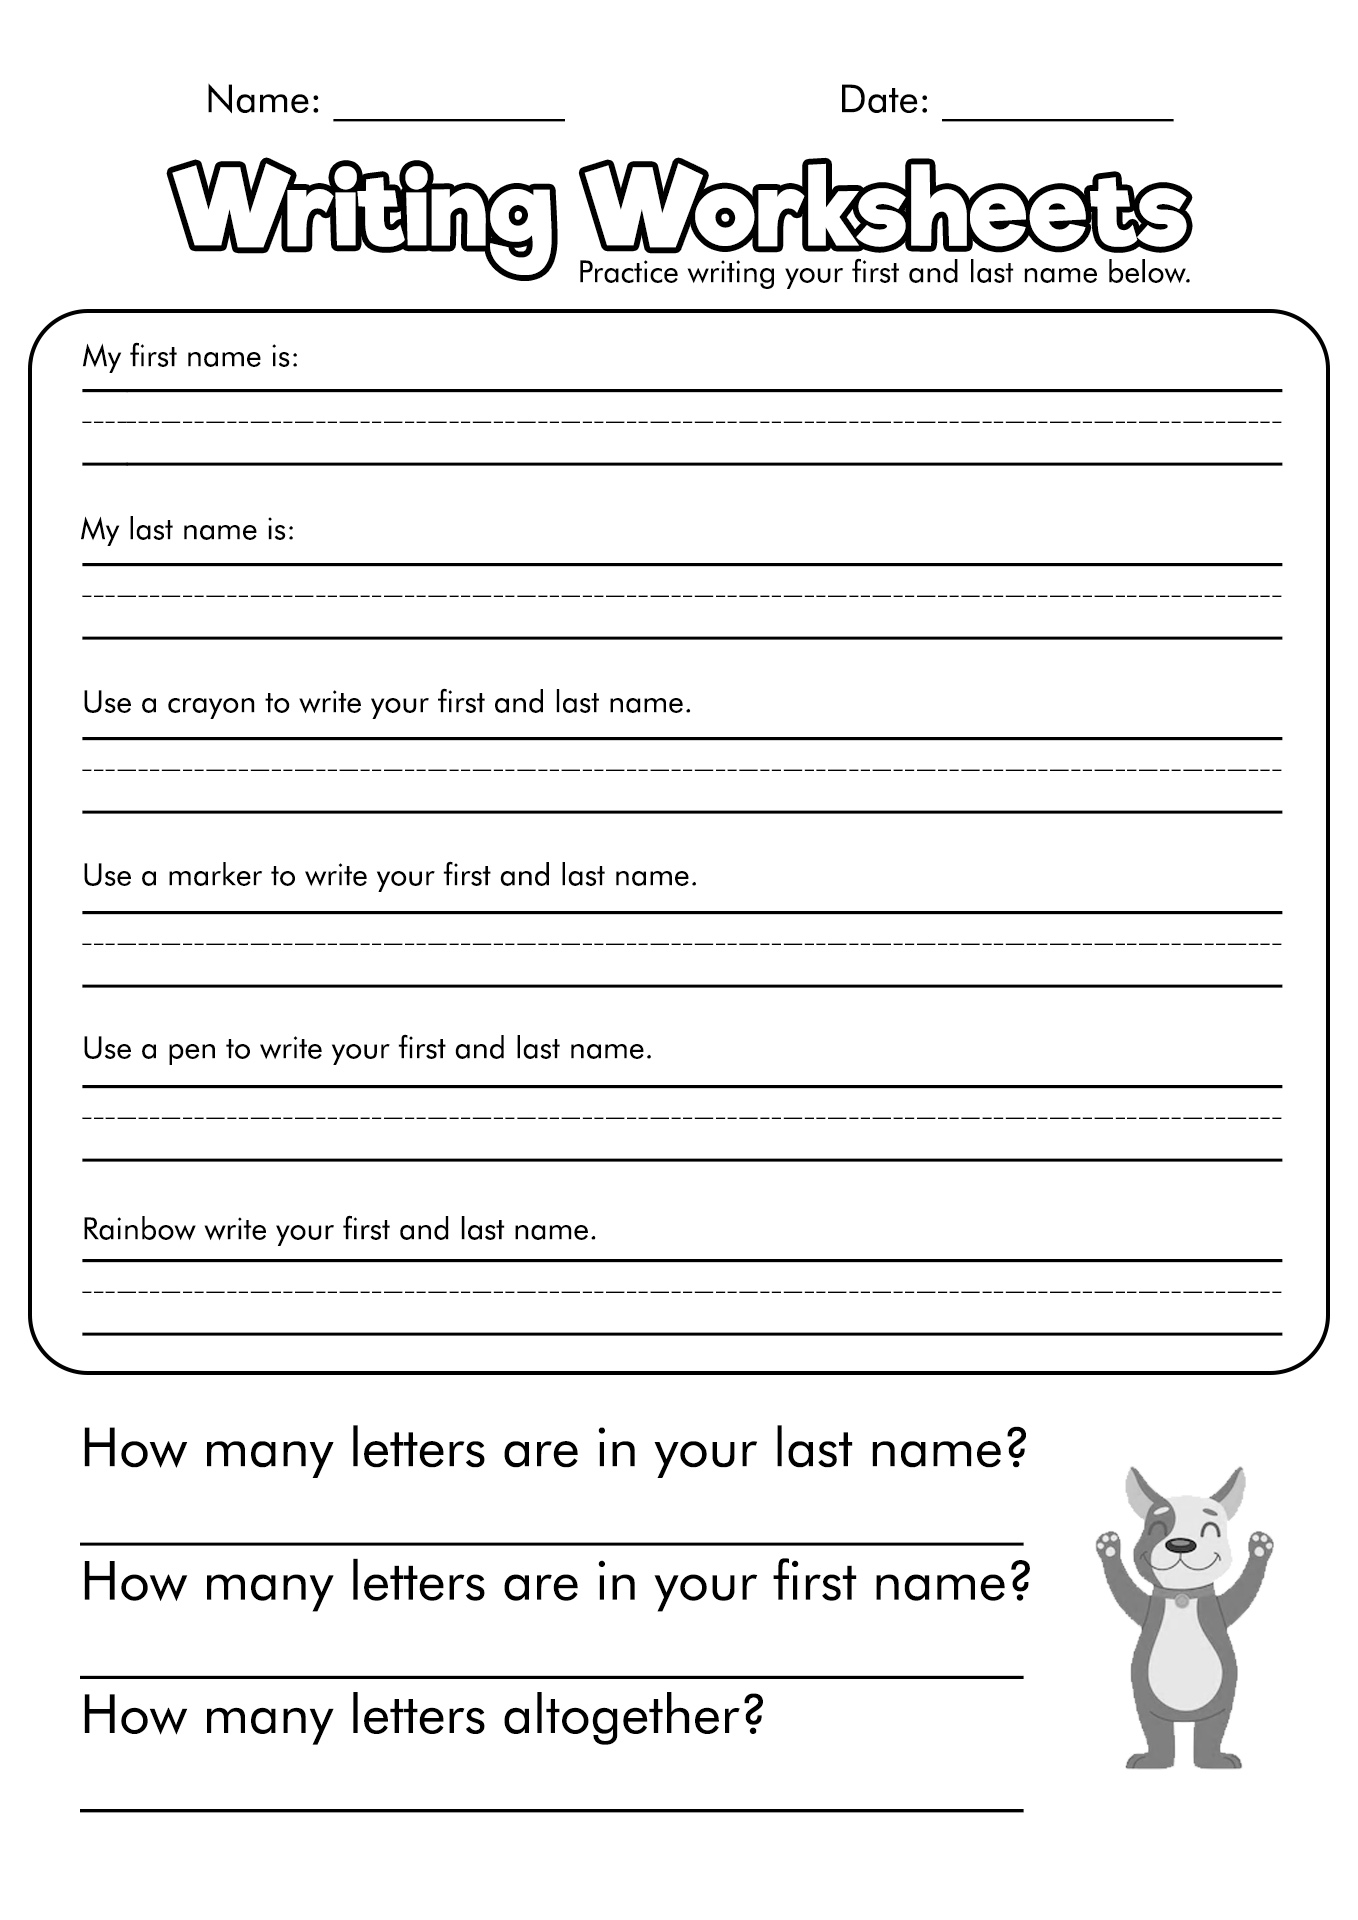 handwriting-worksheets-for-1st-graders